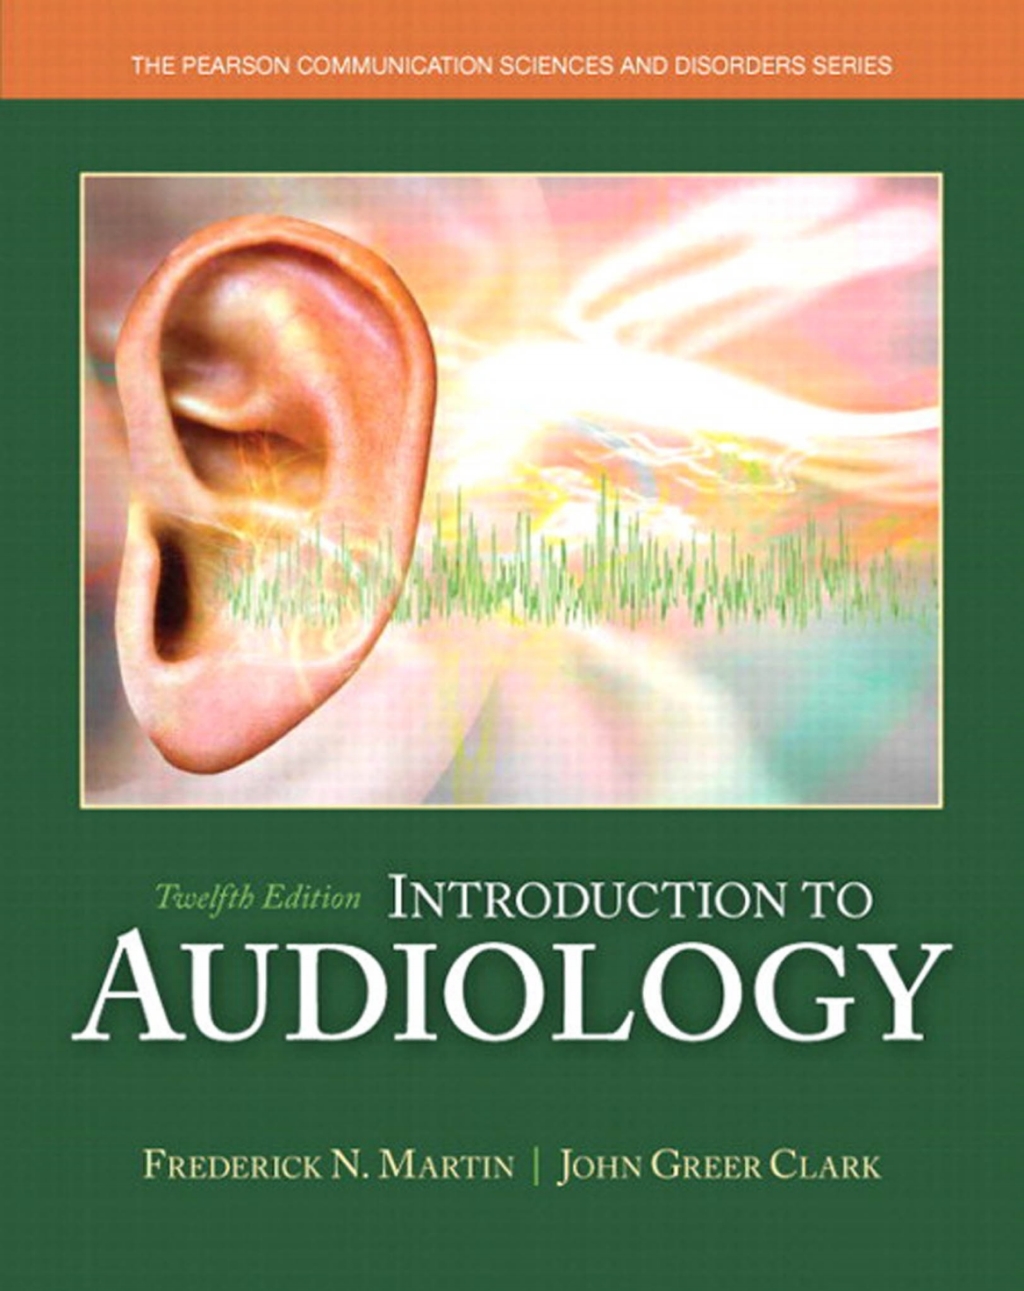 Introduction to Audiology (eBook) - Frederick N. Martin; John Greer Clark